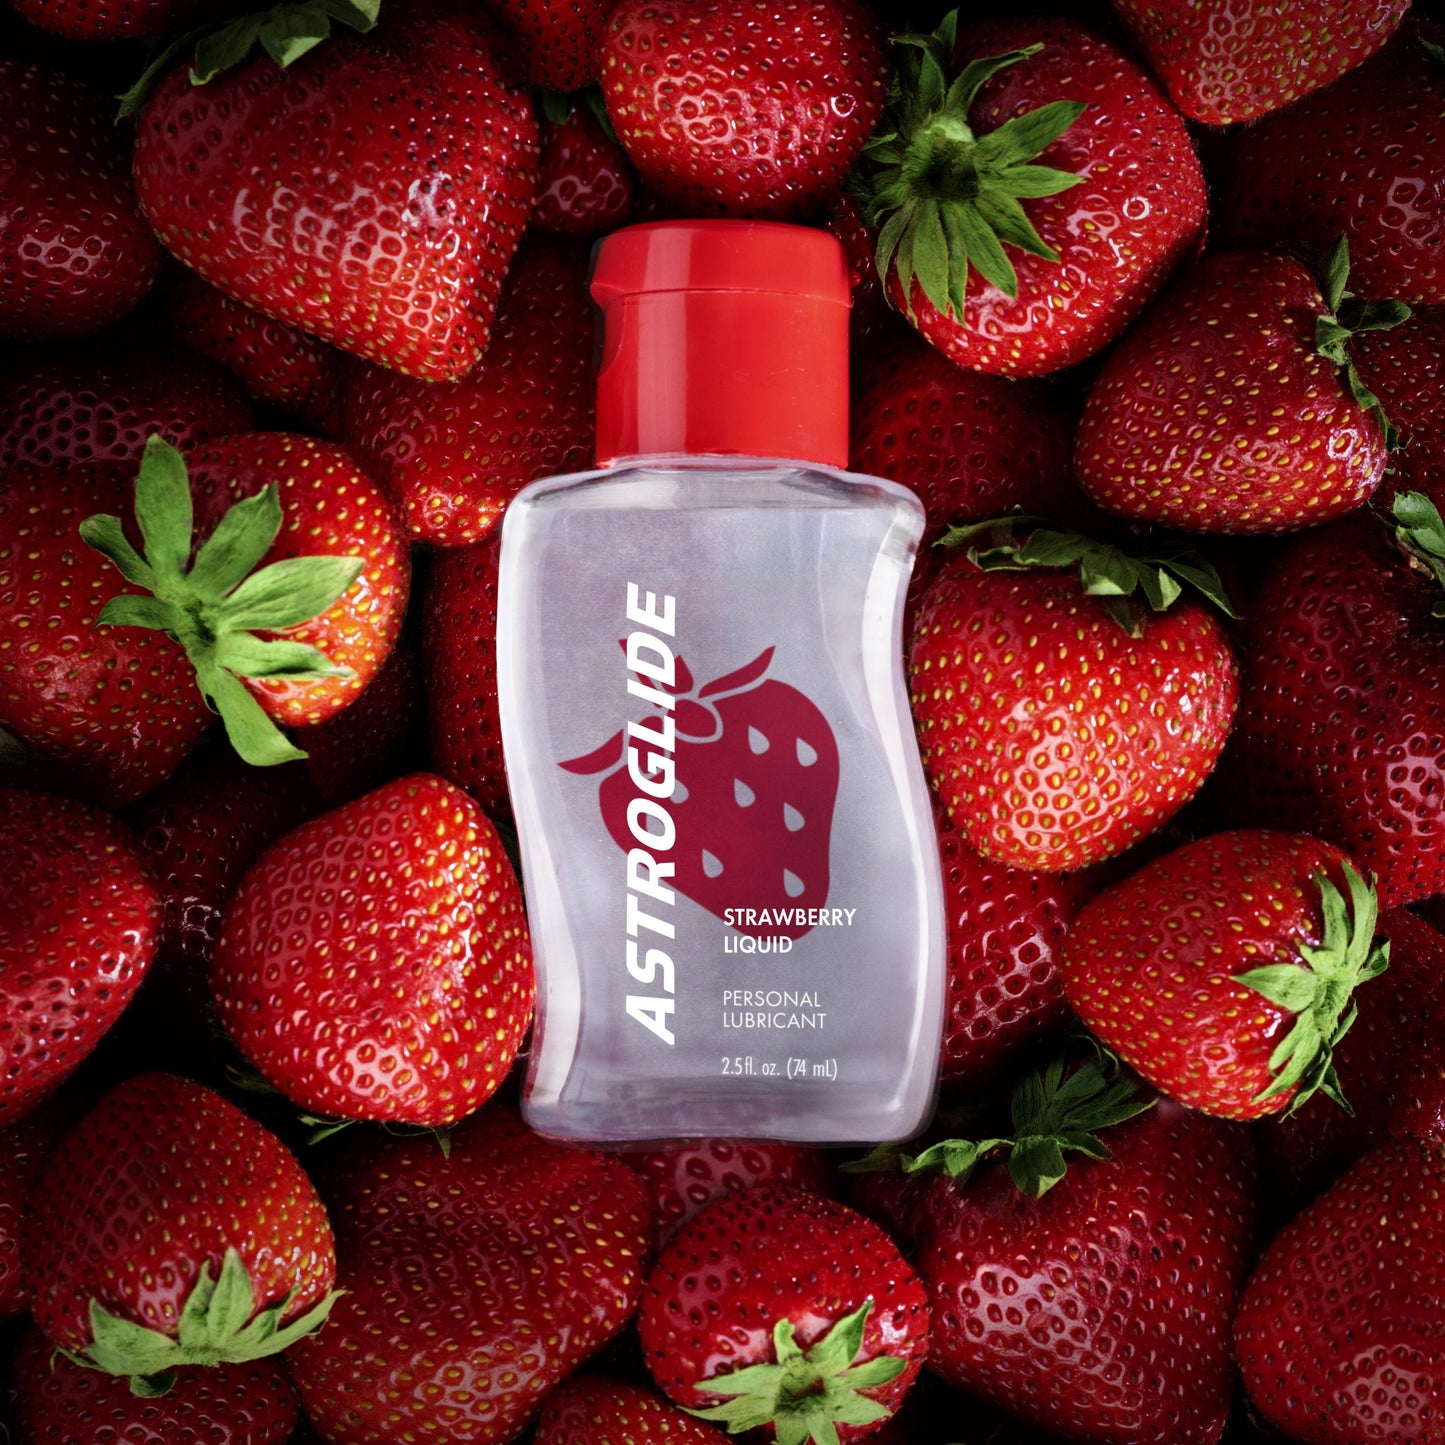 ASTROGLIDE ASTROGLIDE Strawberry Liquid 士多啤梨味可食用水性潤滑液 148 毫升 潤滑液 購買